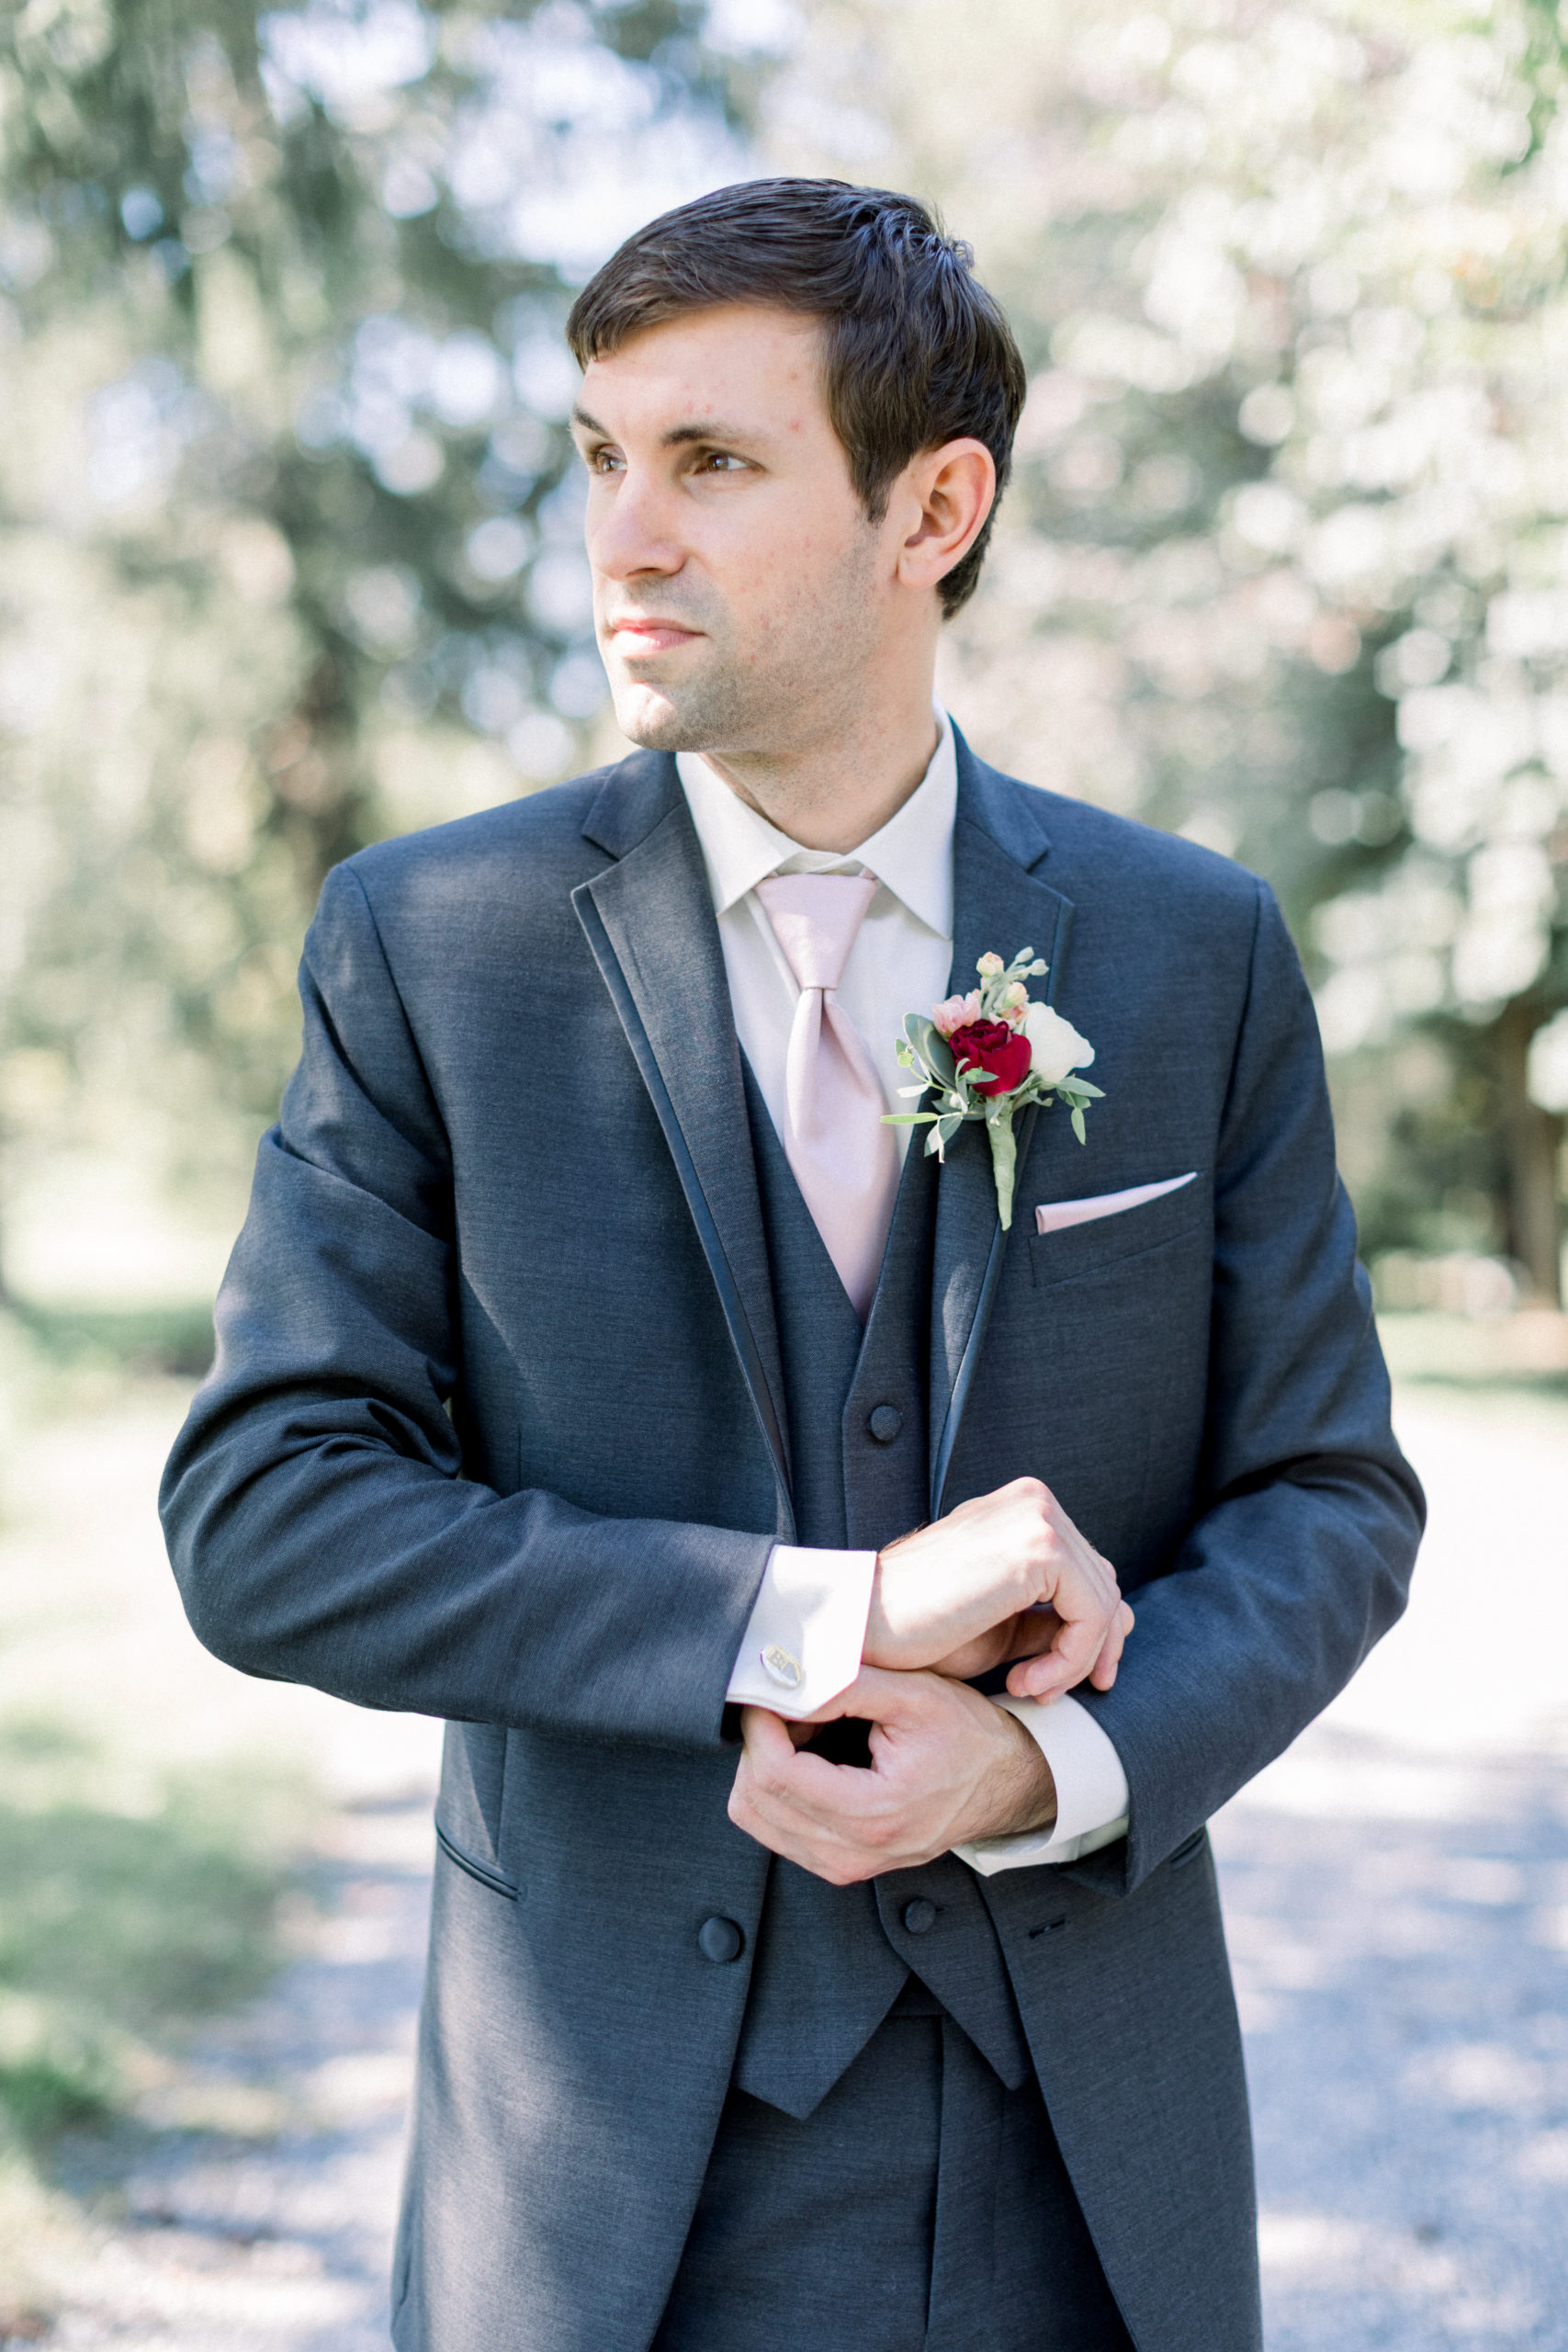 groom adjusting cufflinks on jacket before chic Howard county conservancy wedding